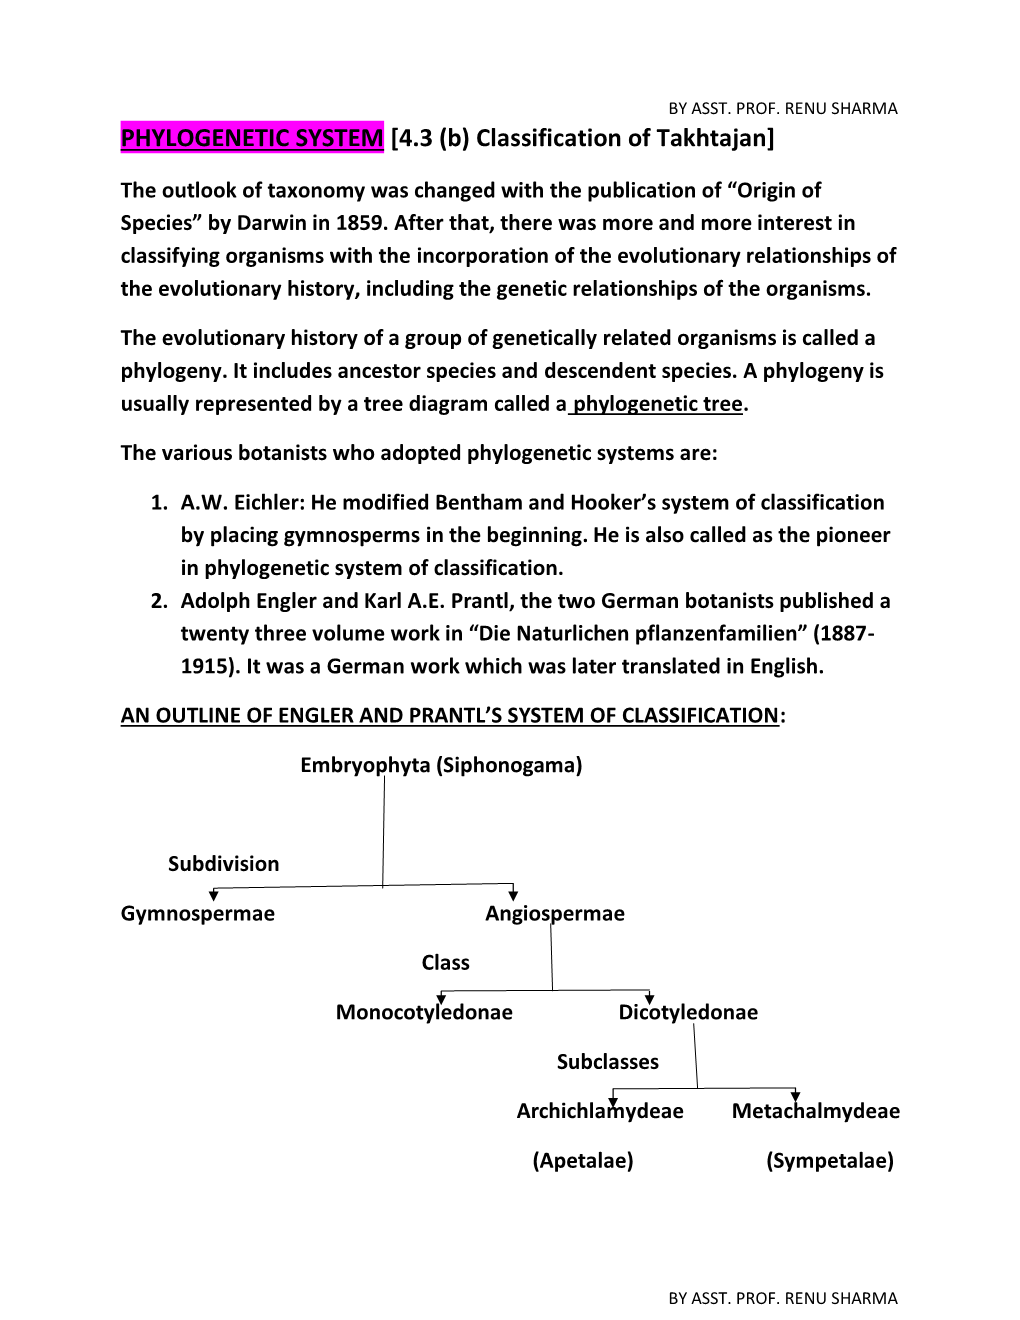 PHYLOGENETIC SYSTEM [4.3 (B) Classification of Takhtajan]